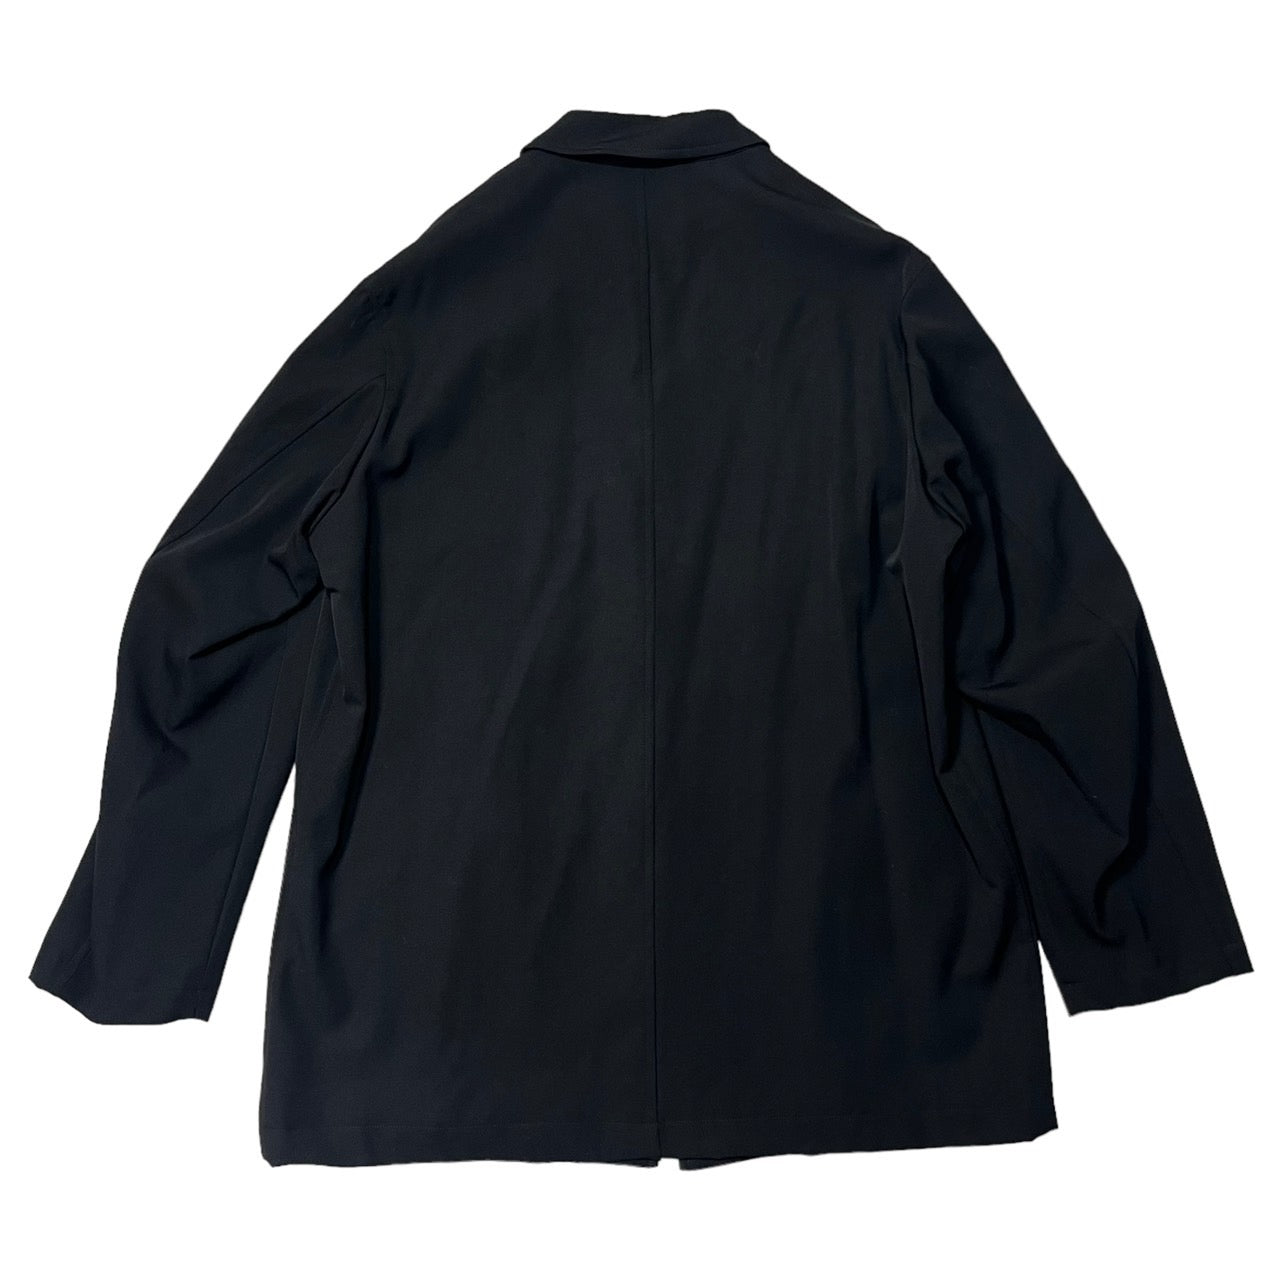 Y's for men(ワイズフォーメン) 90's wool gabardine double zip coat/ウールギャバジンダブルジップコート MW-Y04-100 SIZE M ブラック